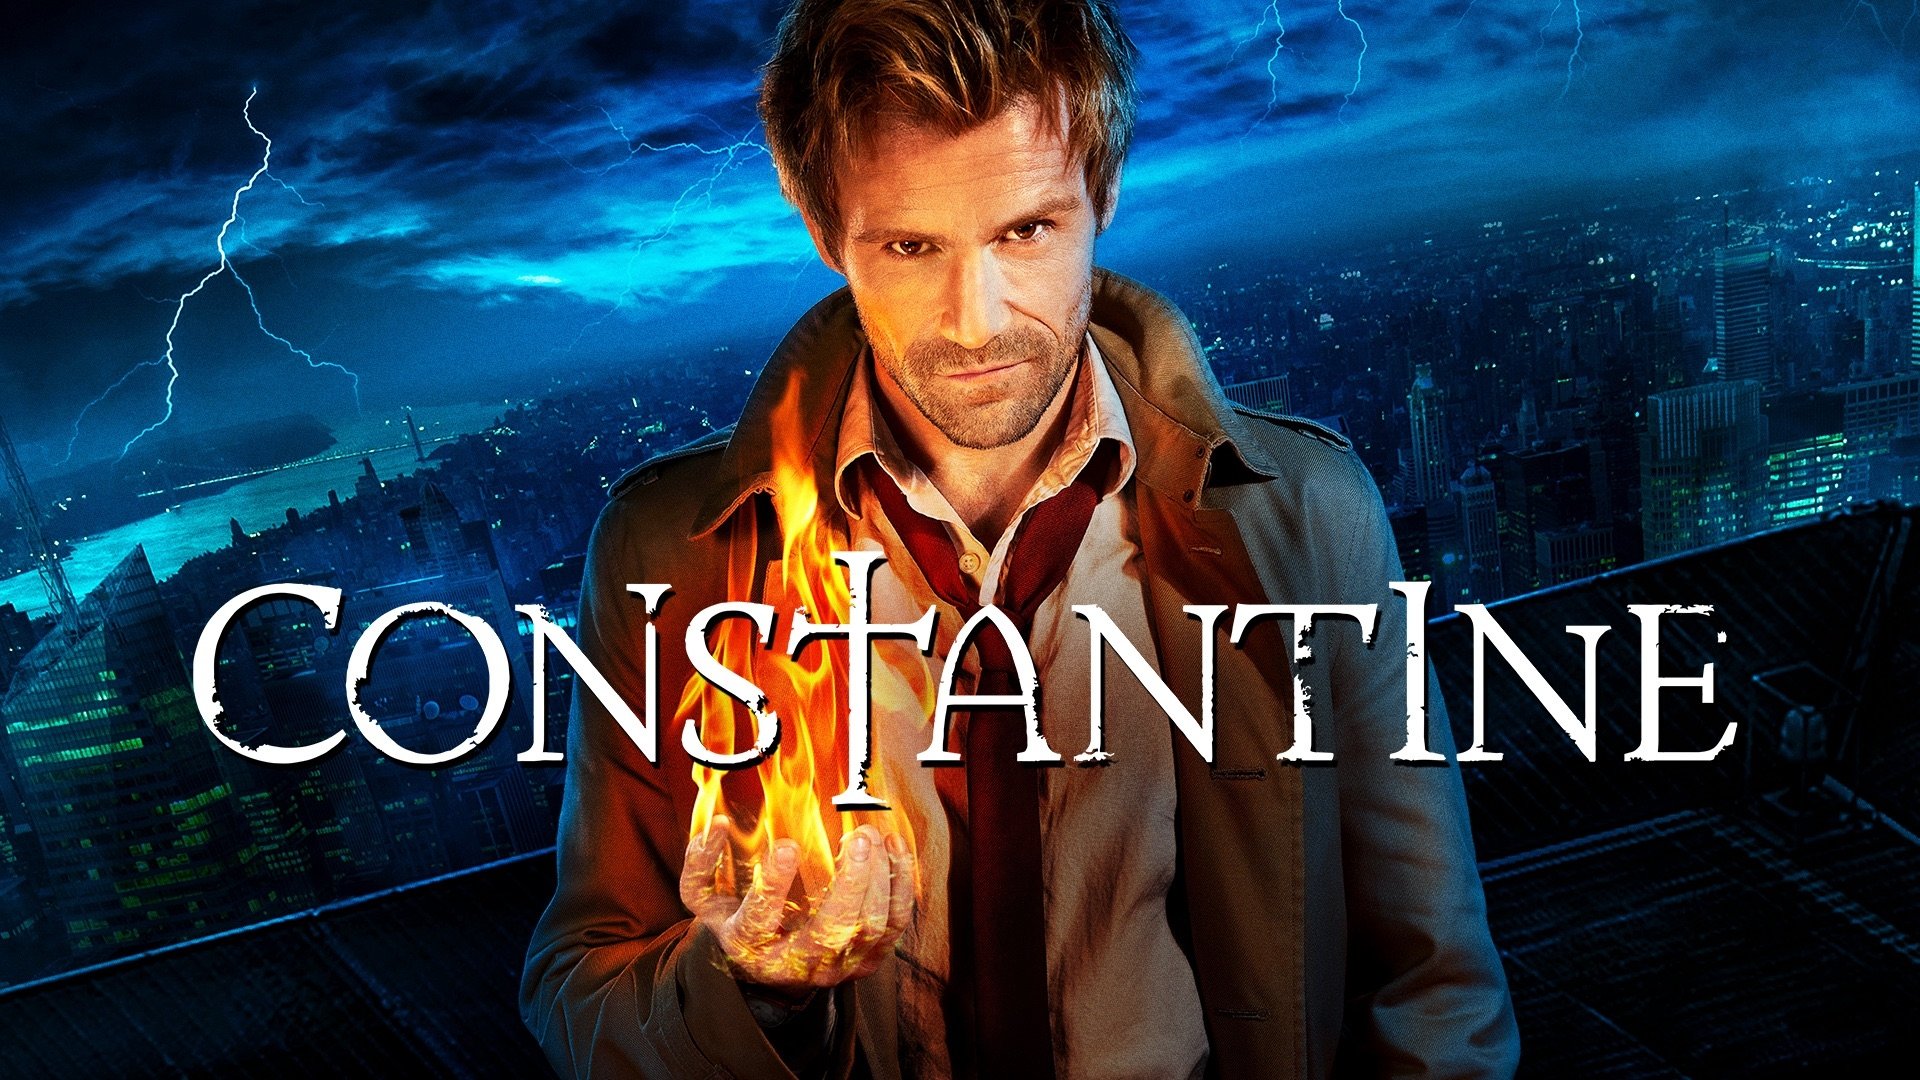 Matt Ryan as John Constantine in a striking HD desktop wallpaper and background.